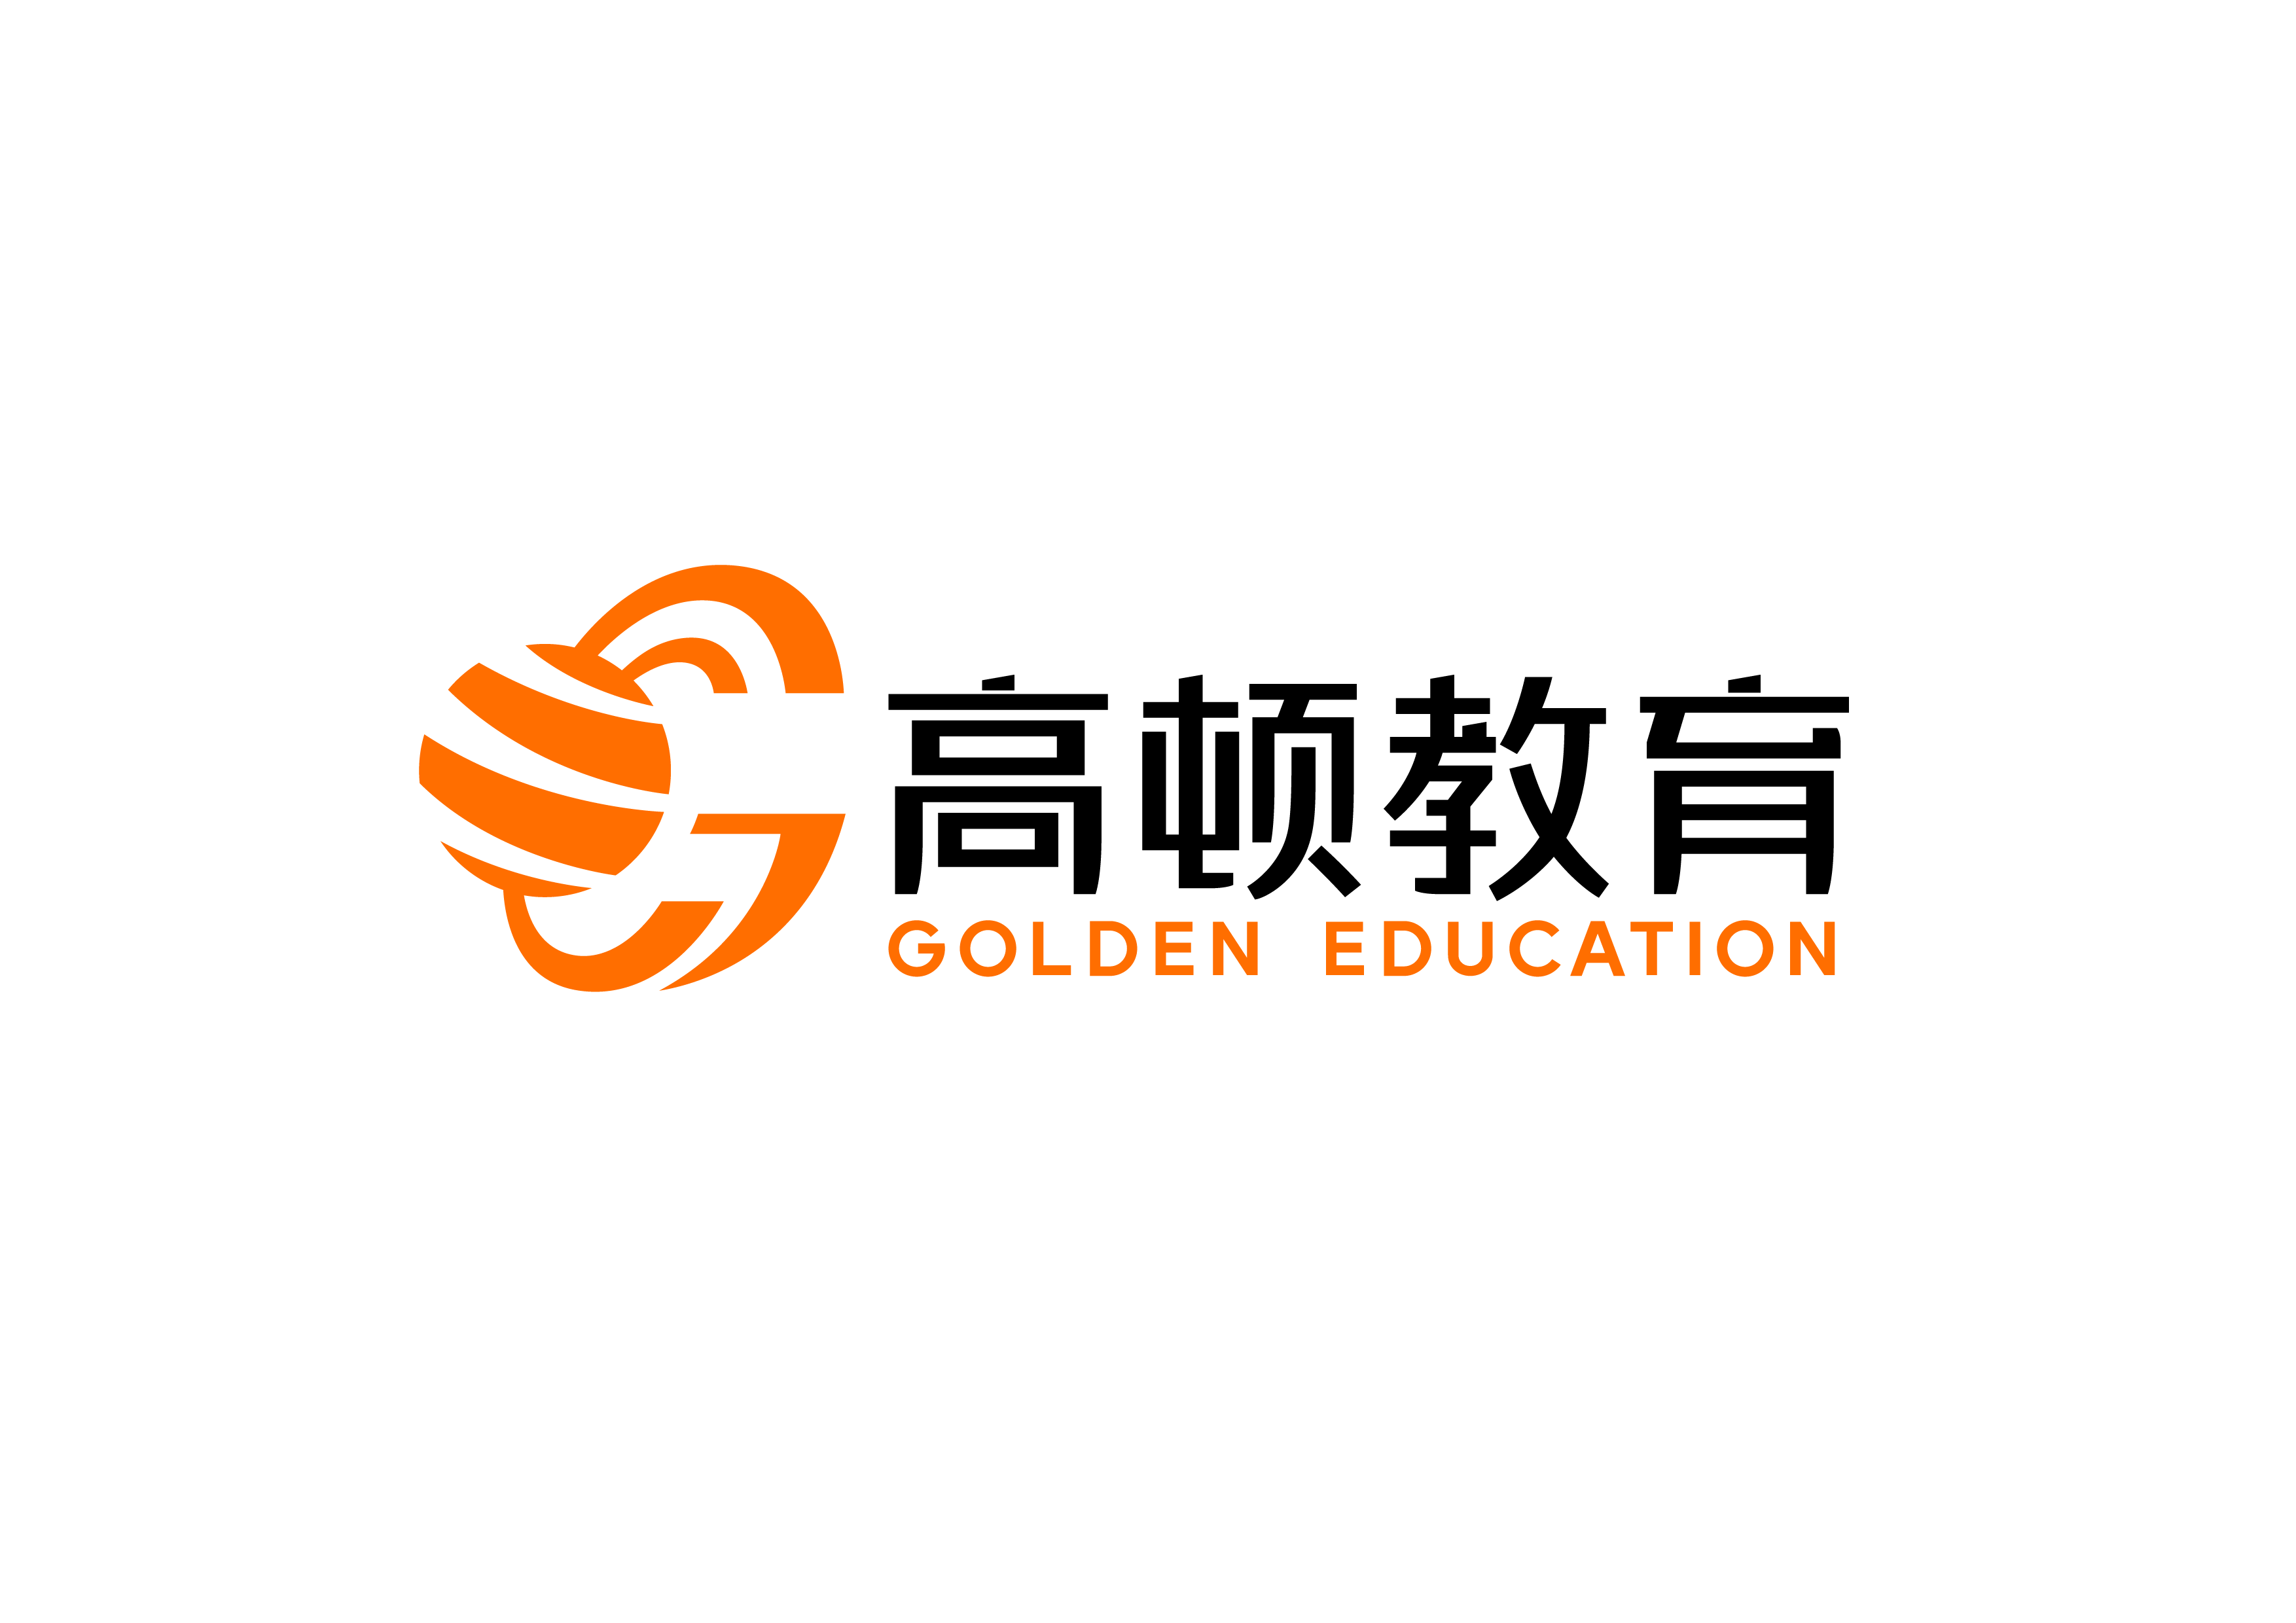 golden education